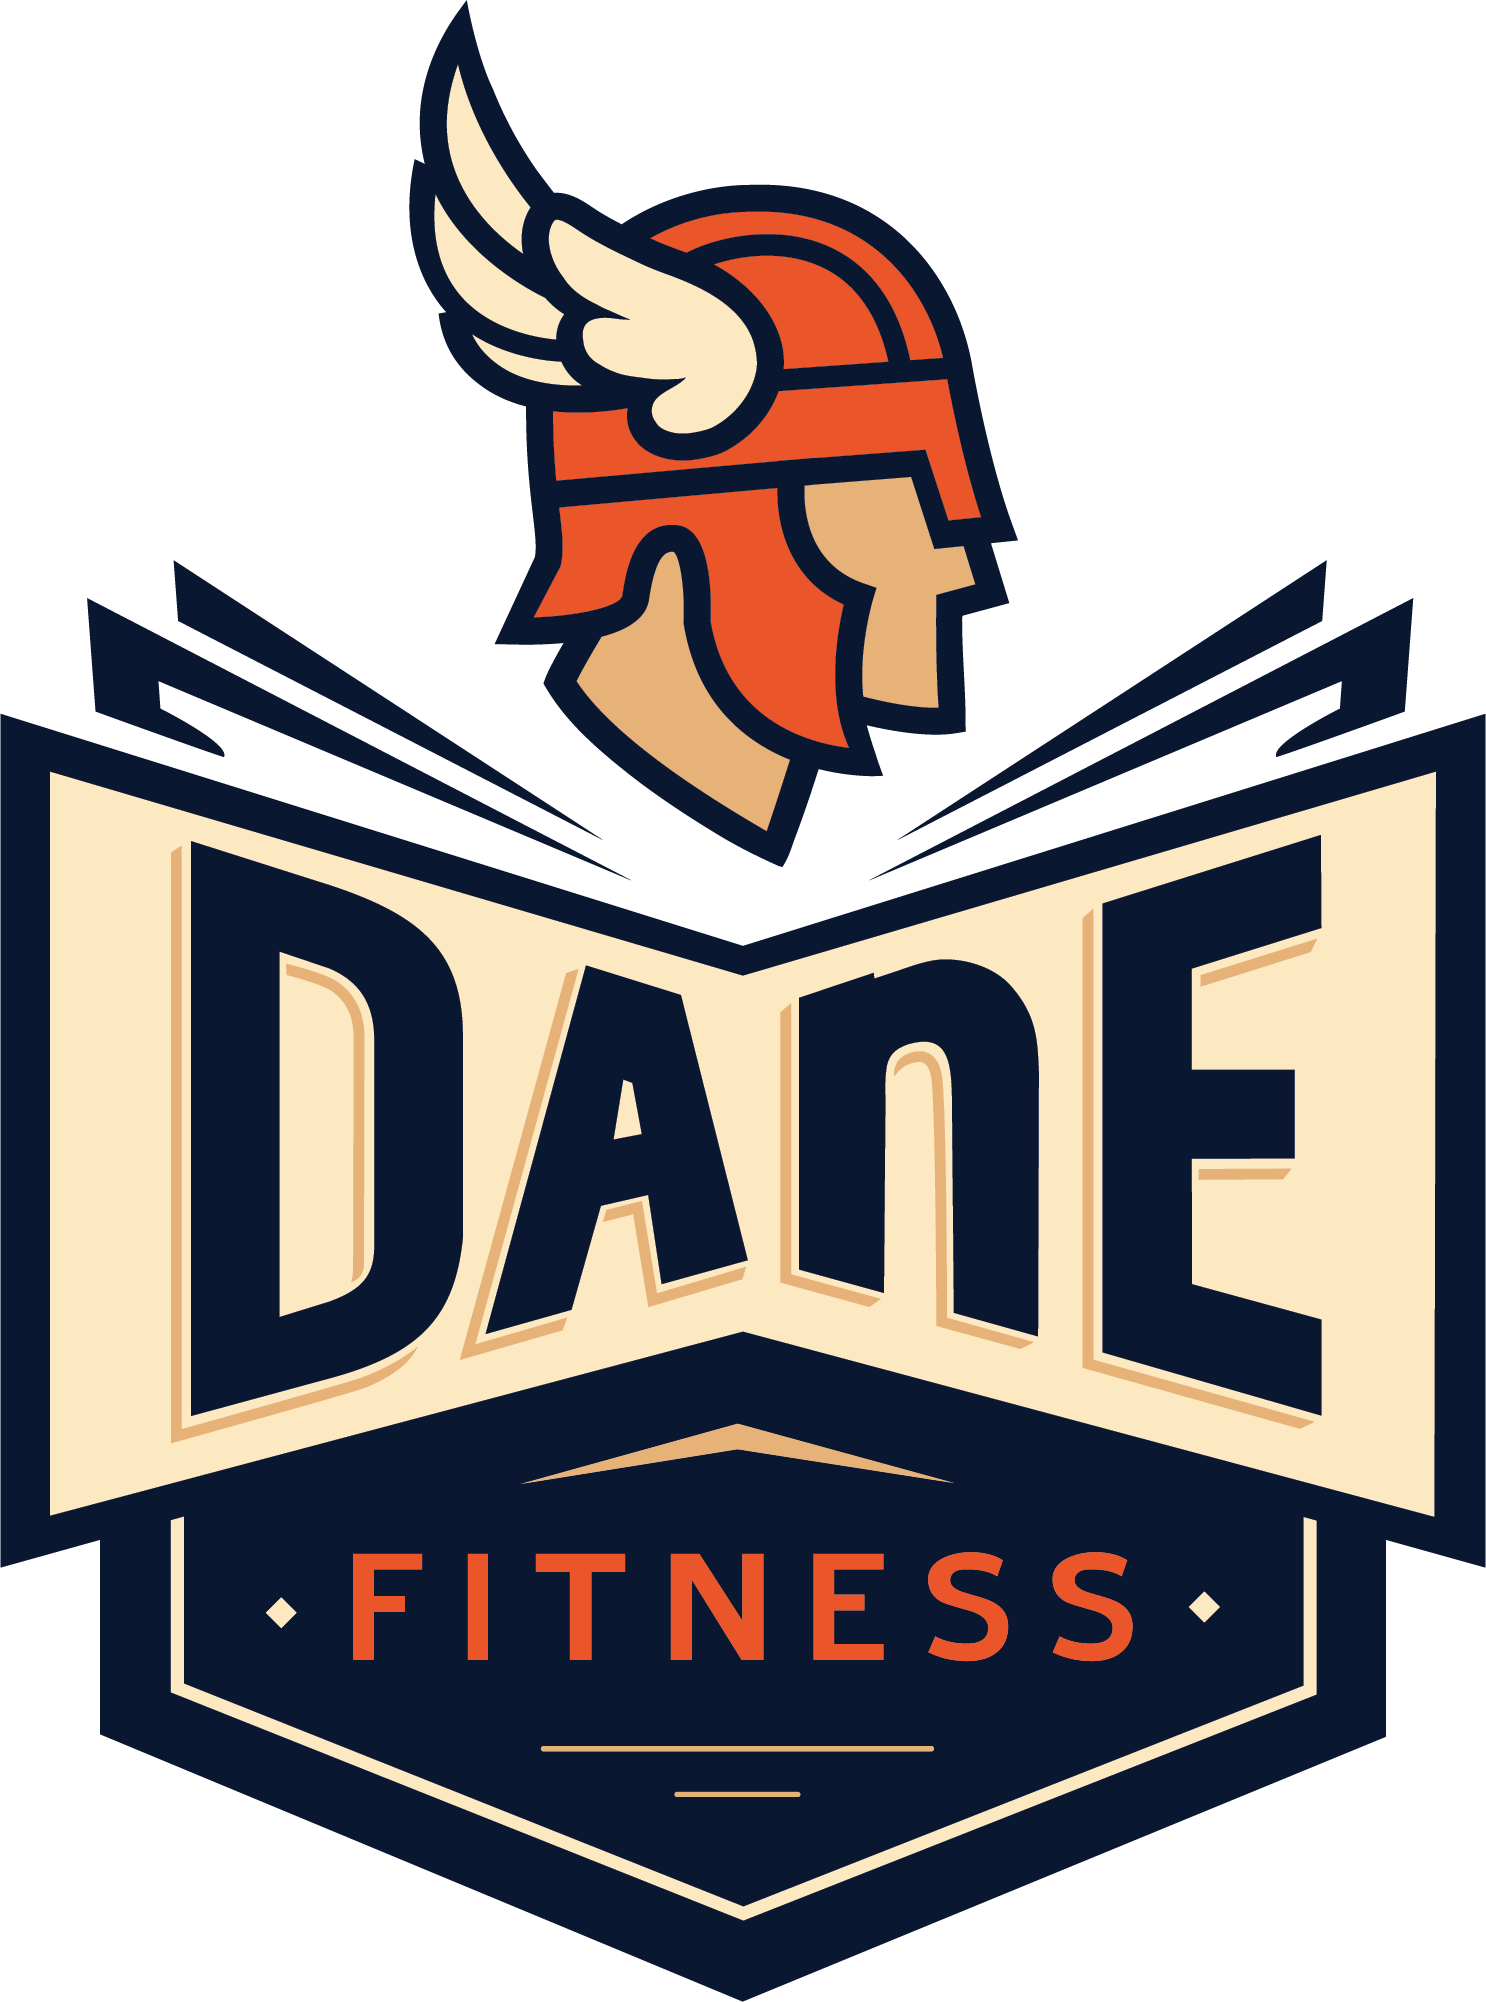 Nashville Fitness Equipment Sales & Service | Dane Fitness